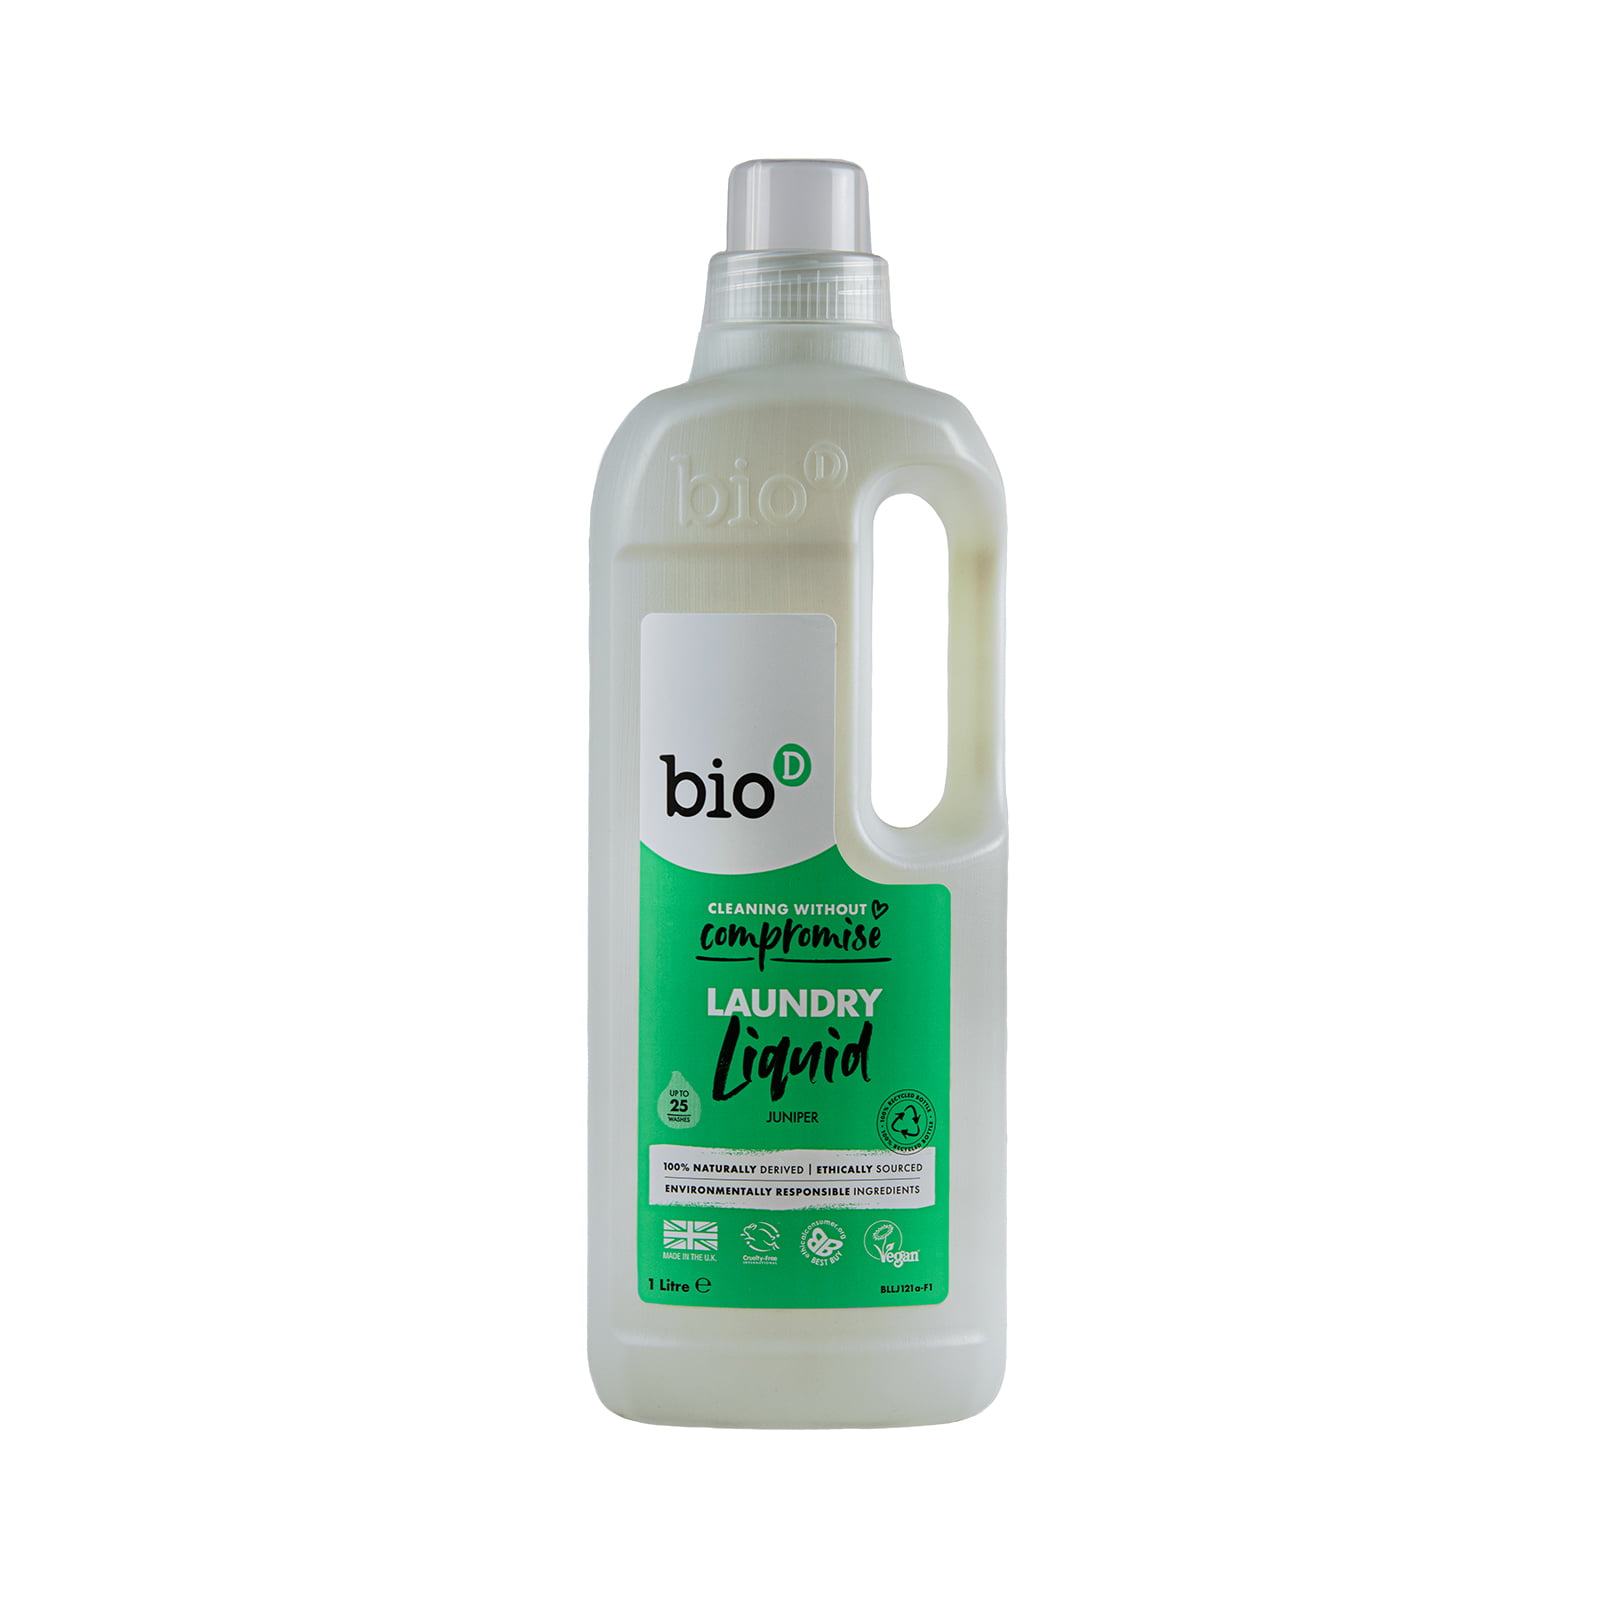 Bio-D non-bio laundry liquid